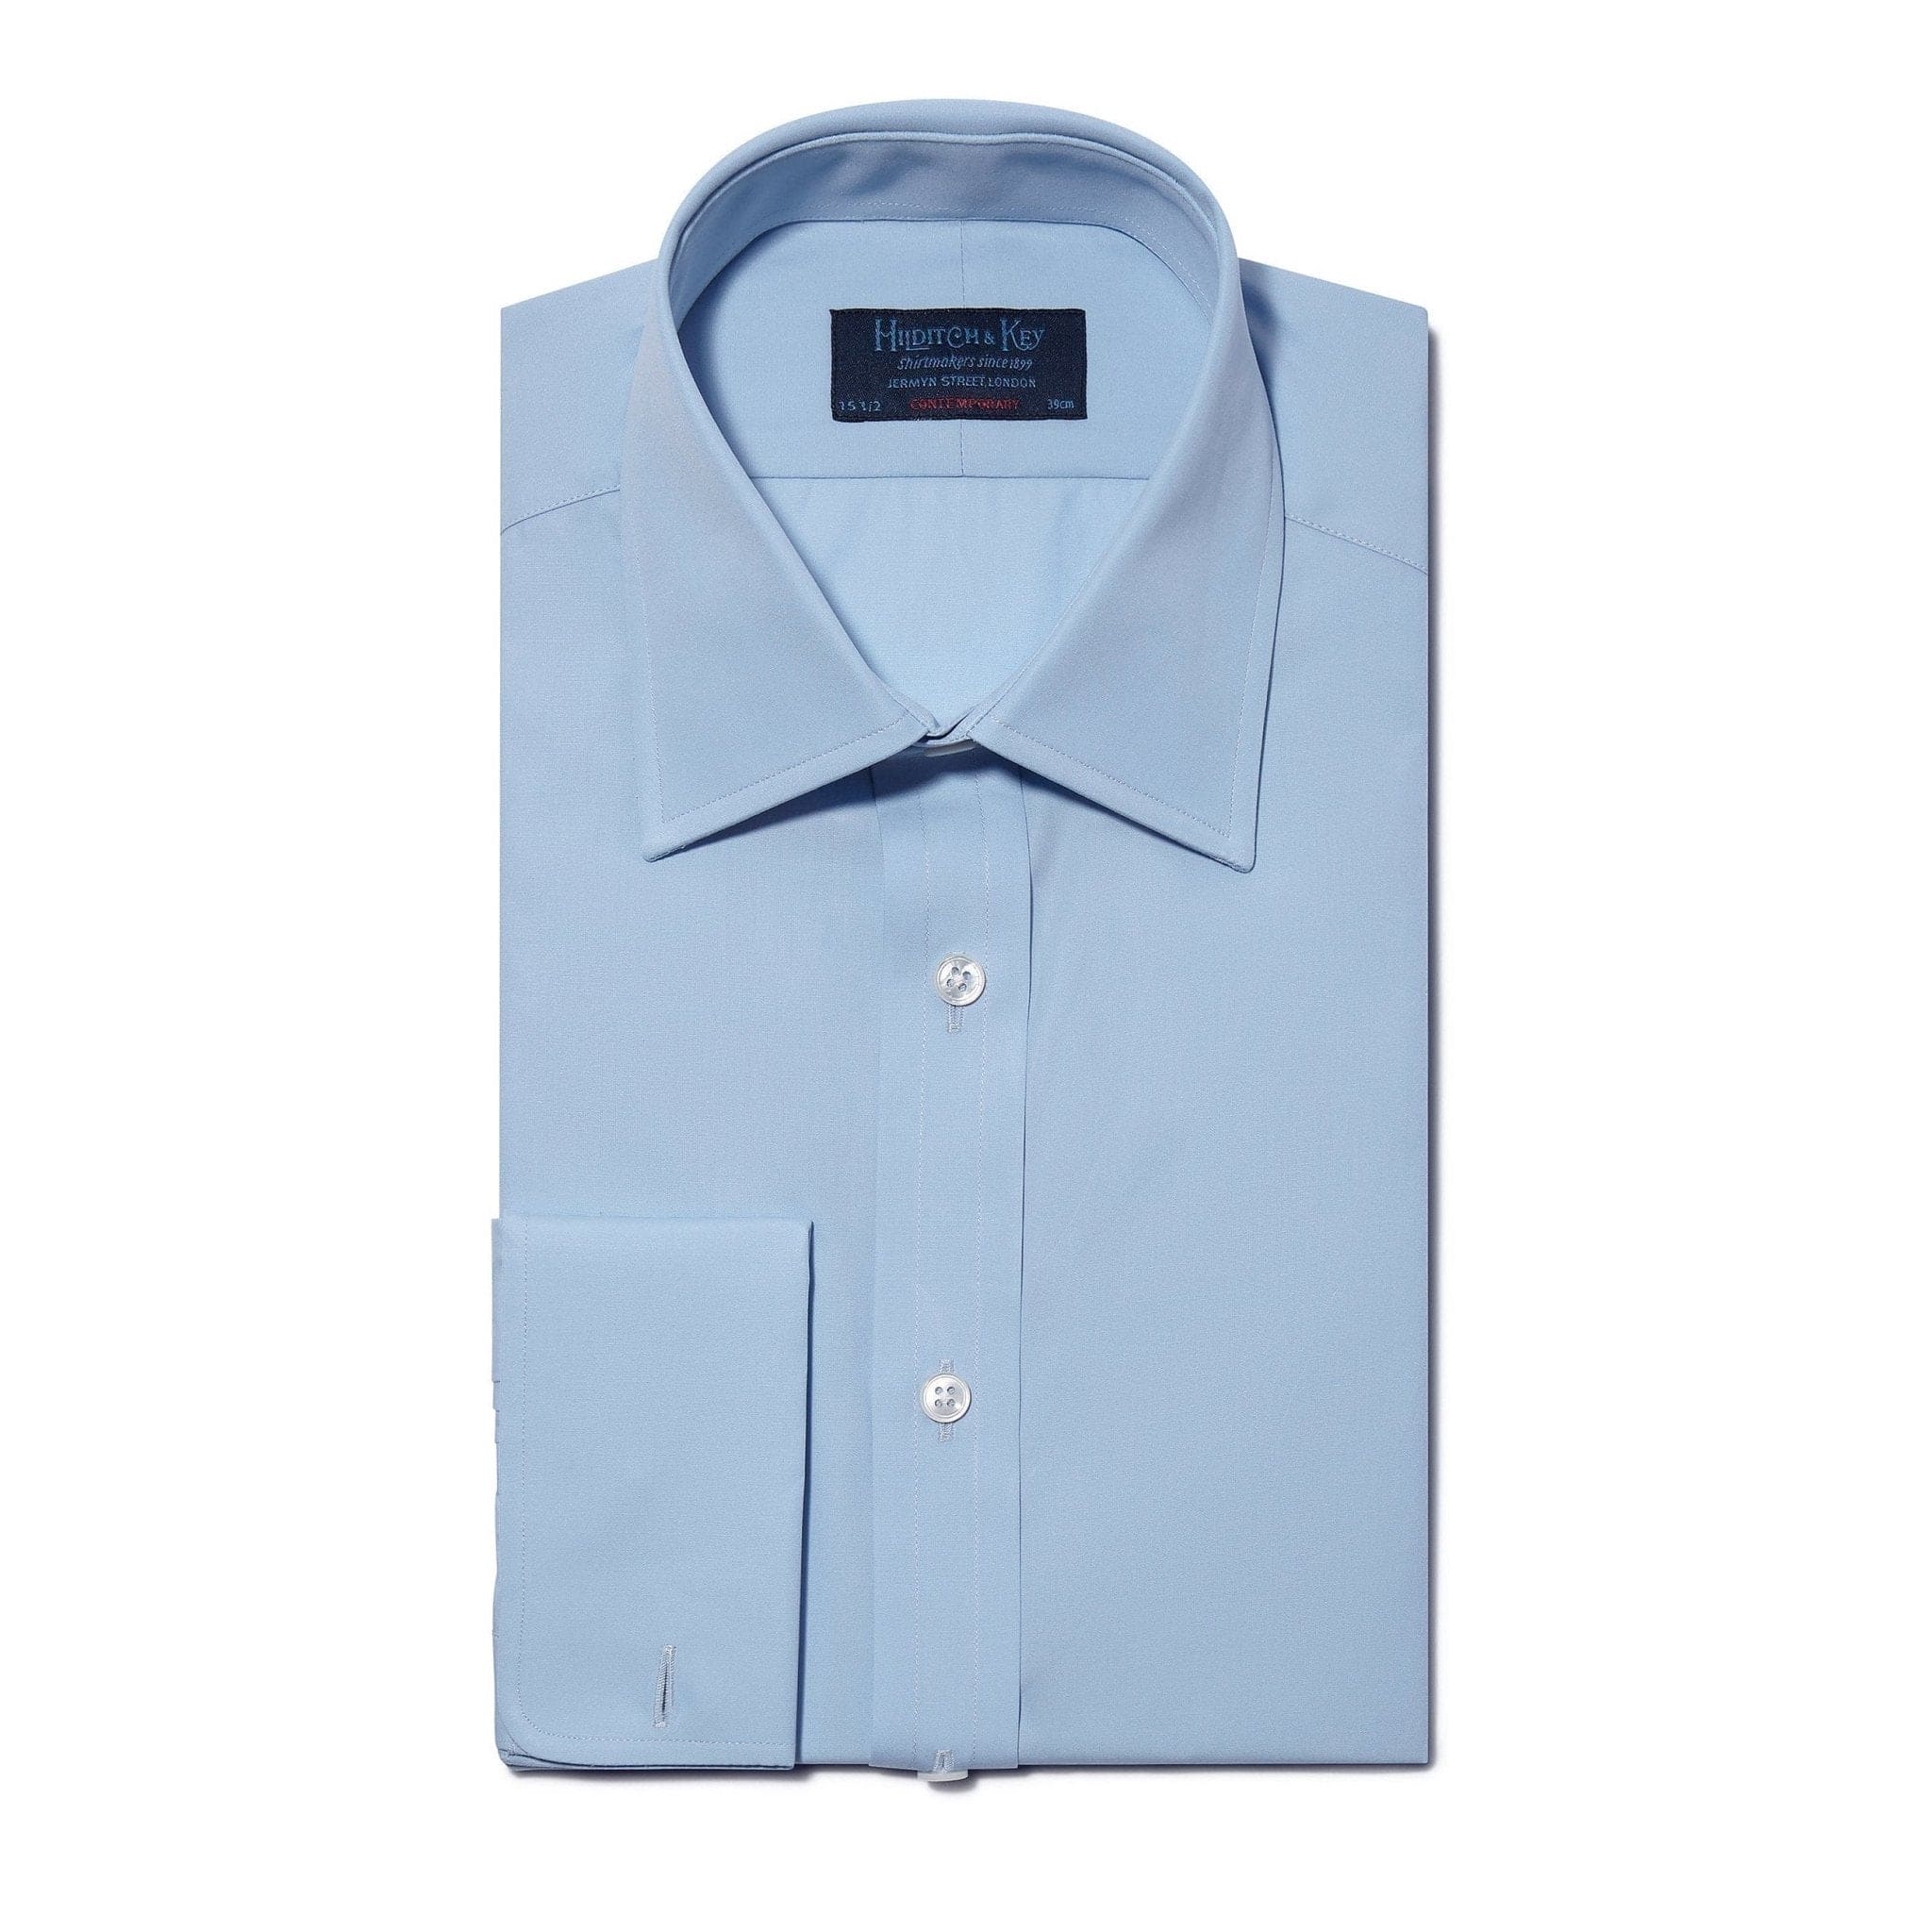 Contemporary Fit, Classic Collar, Double Cuff Shirt in a Plain Sky Blue Poplin Cotton - Hilditch & Key